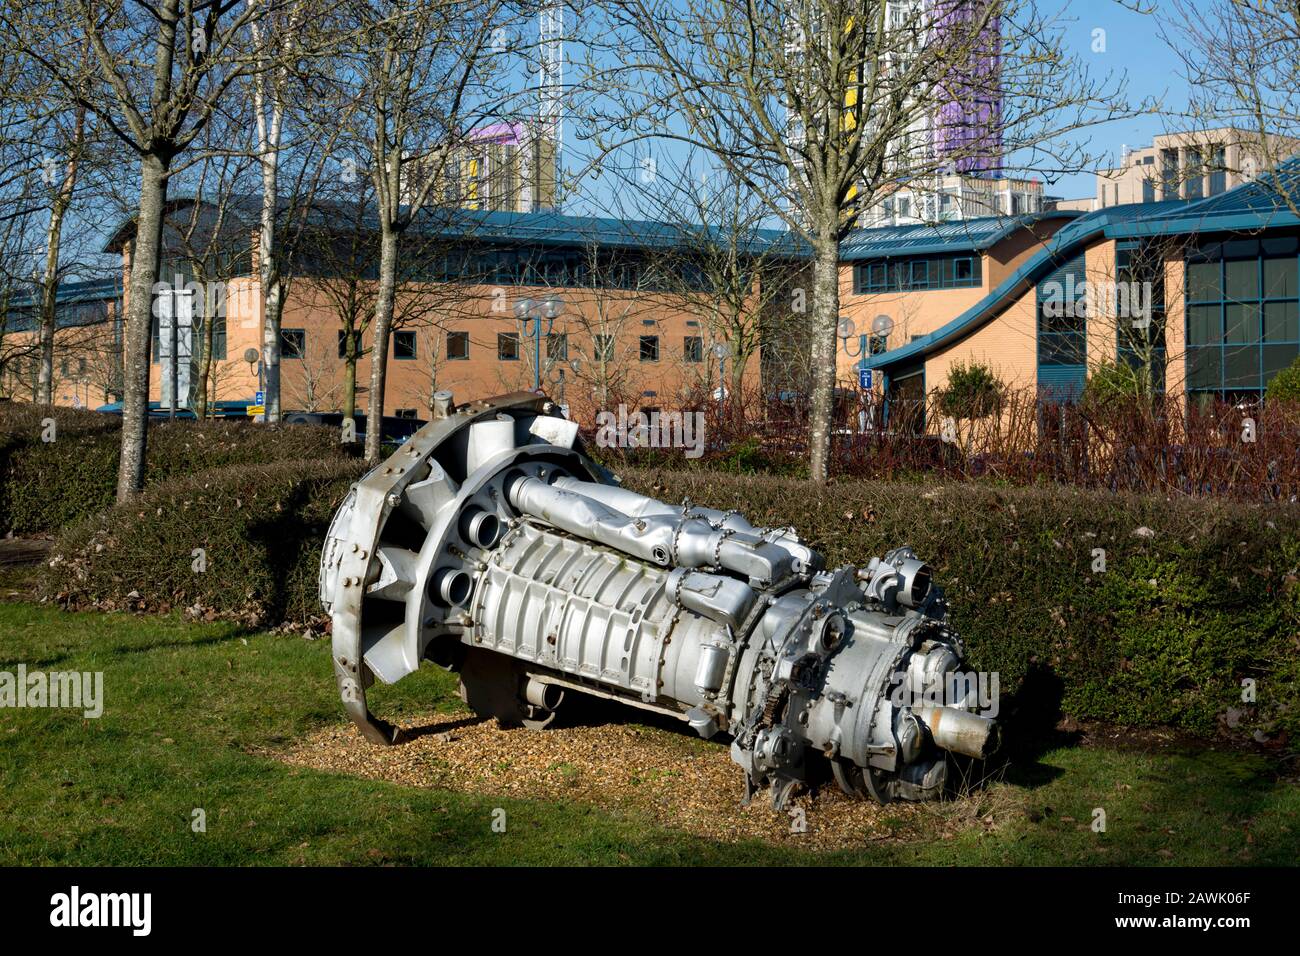 Rolls Royce aero engine, Coventry University Technology Park, Coventry, West Midlands, England, UK Stock Photo